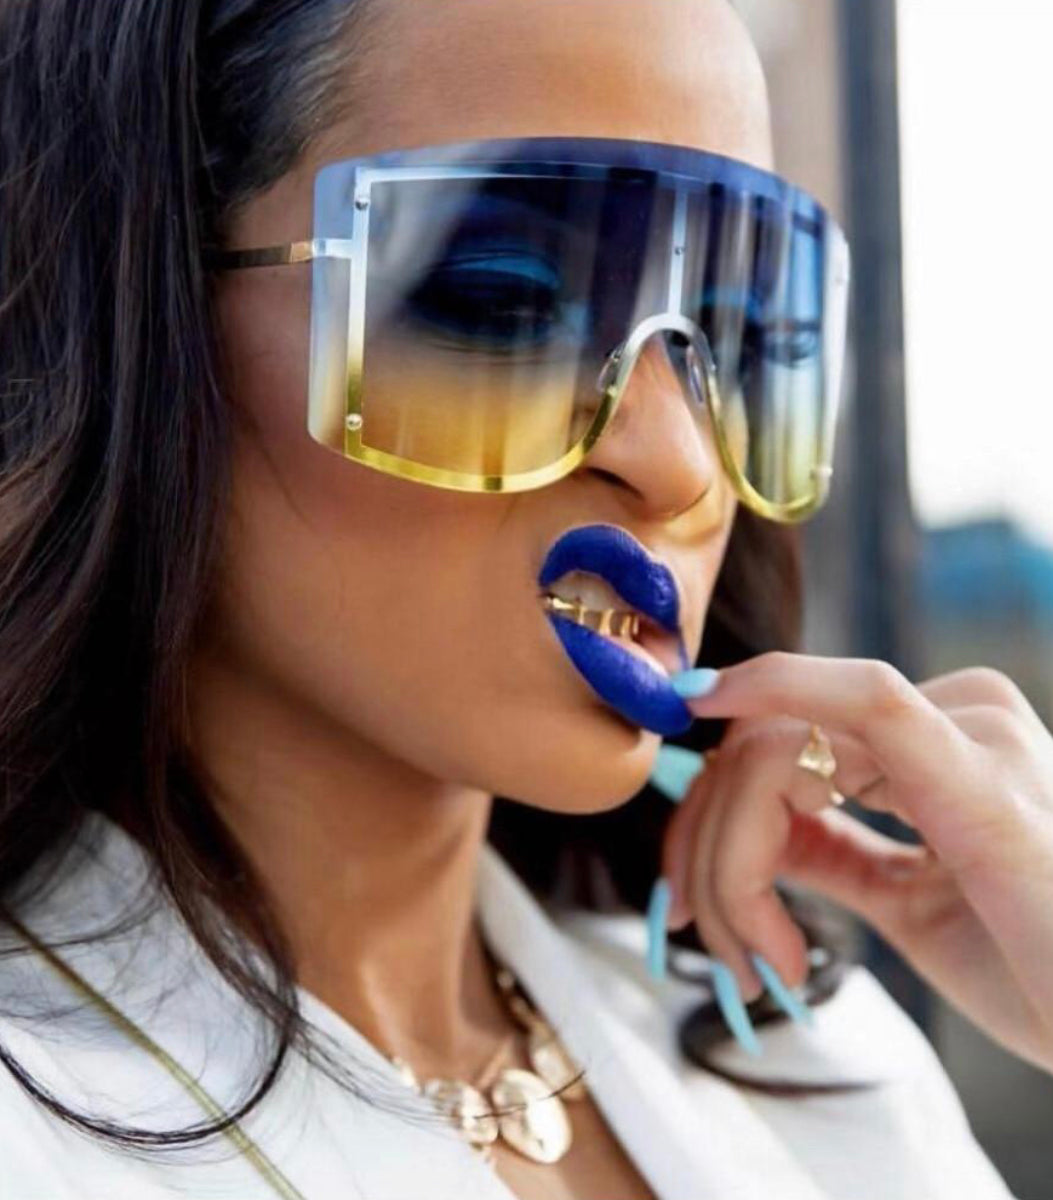 Aaliyah: 'Her sound is the R&B blueprint', Aaliyah